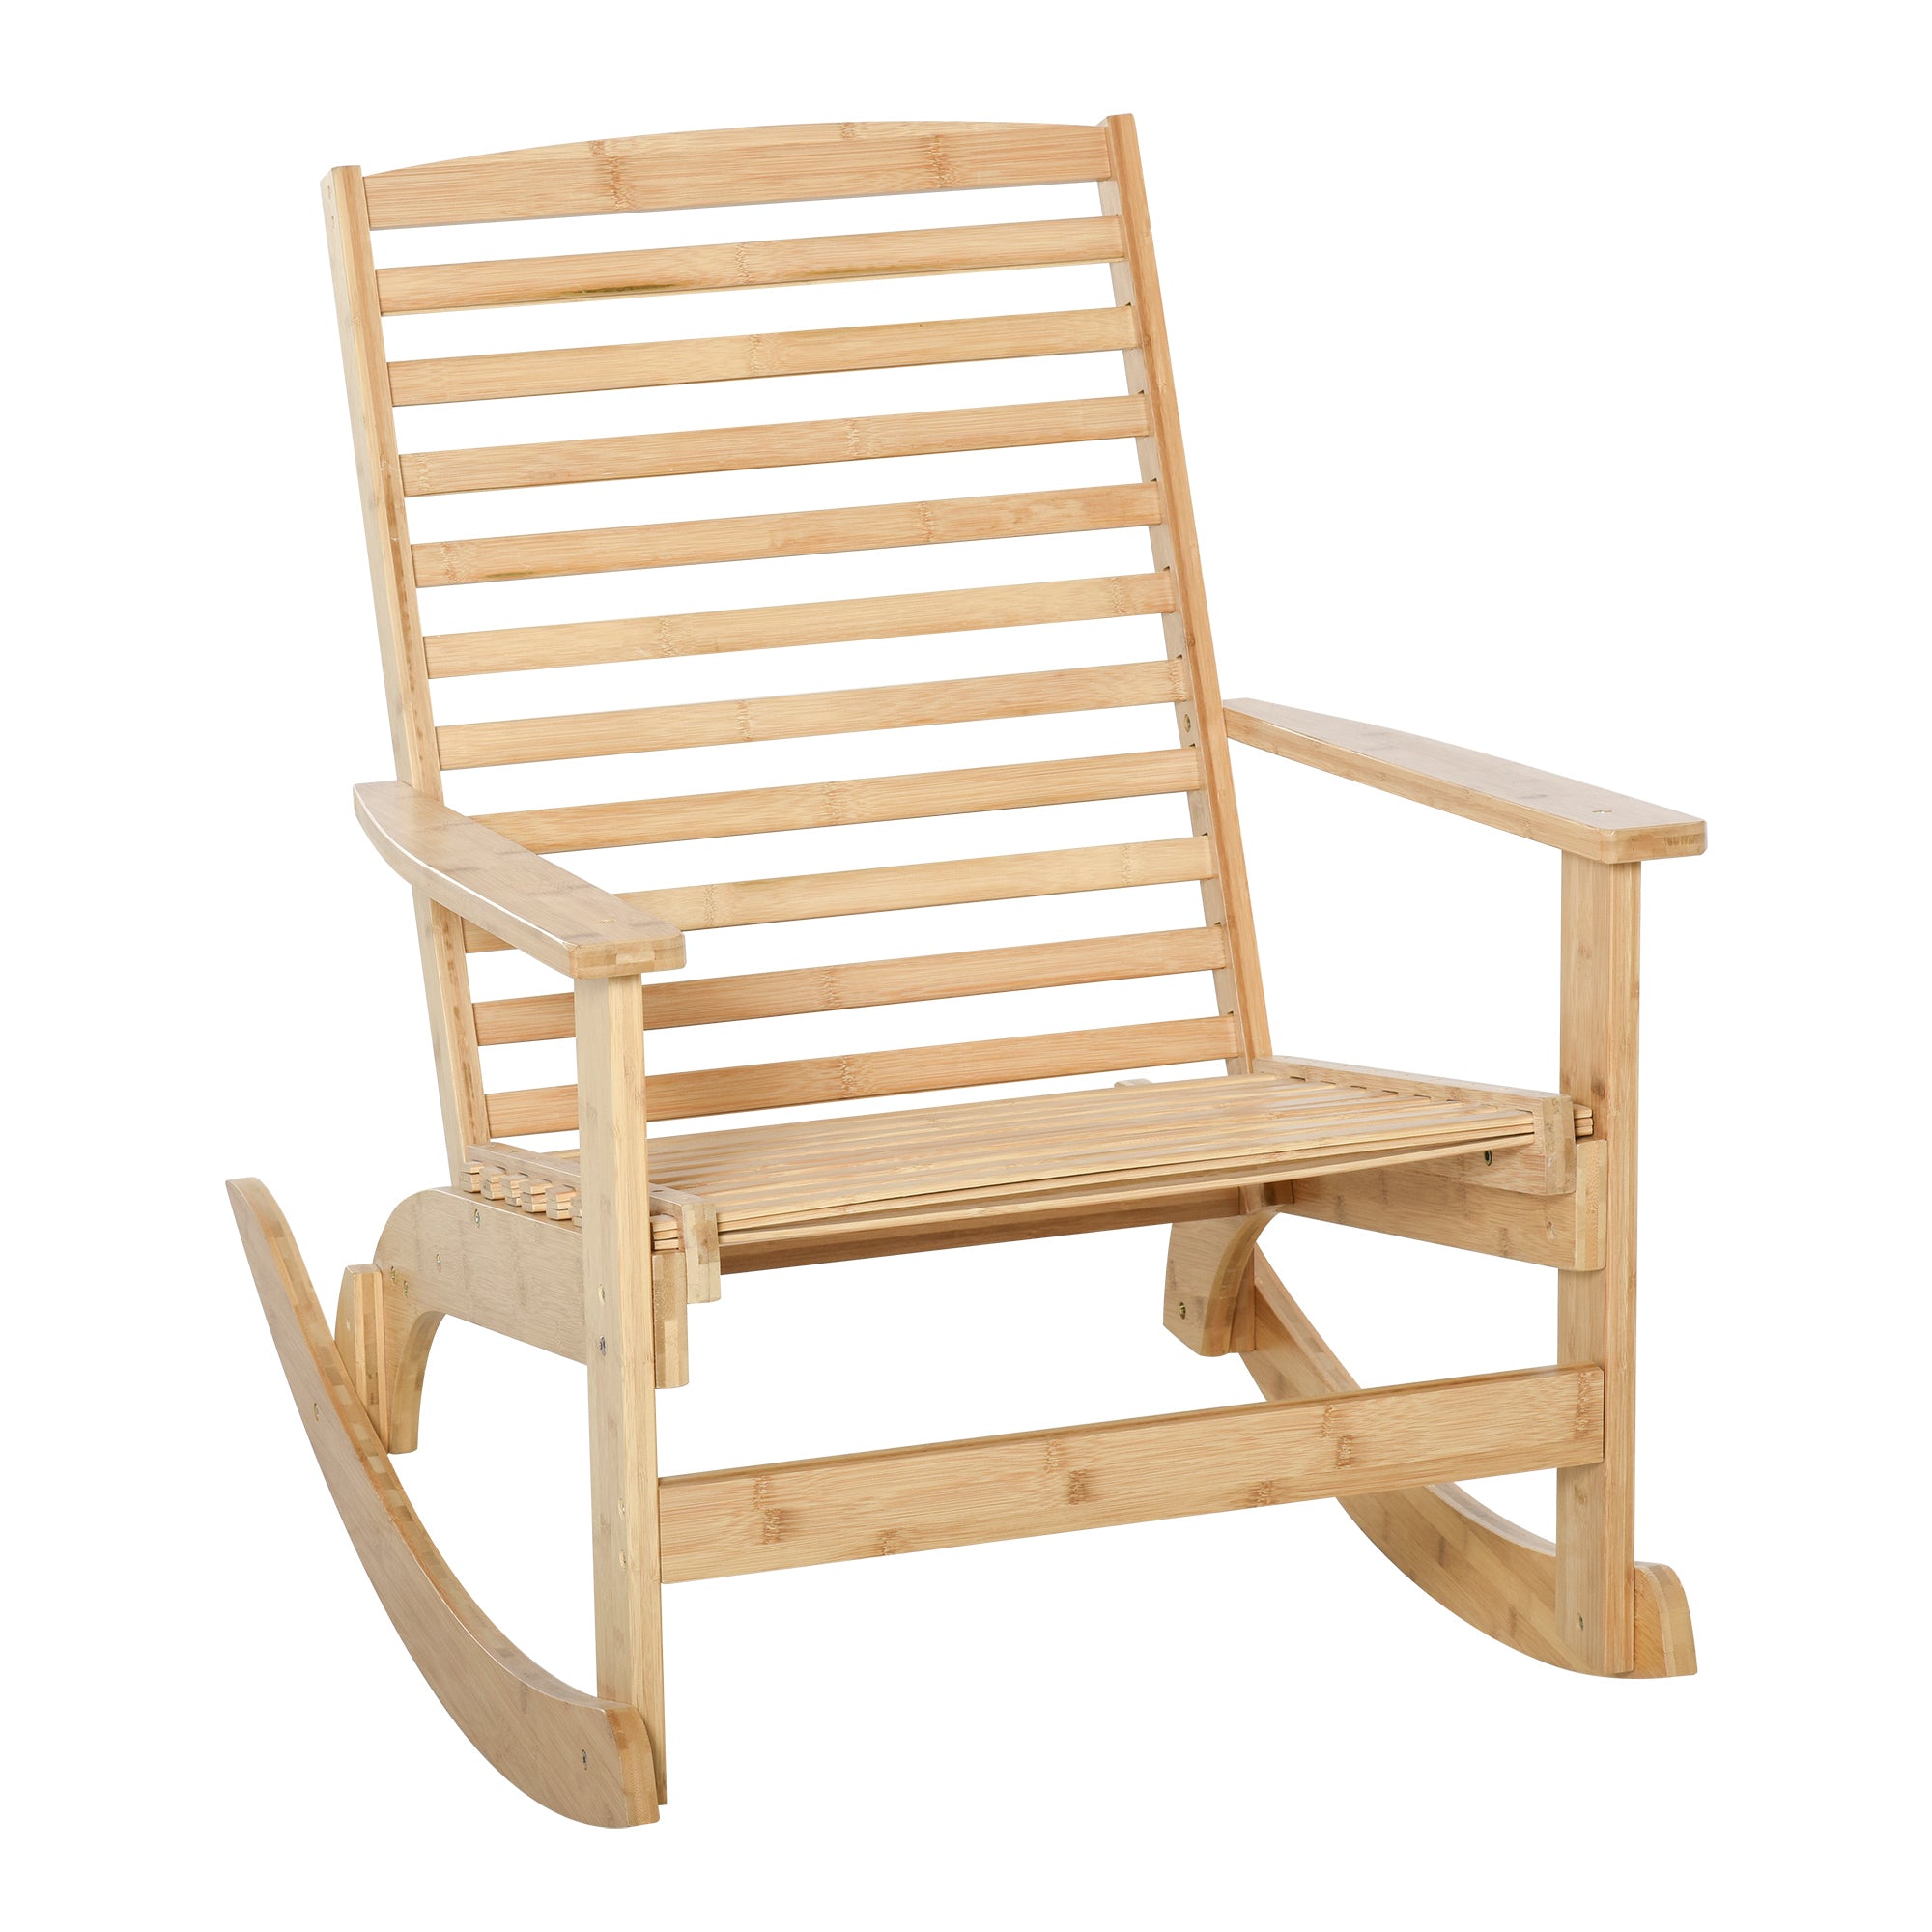 Nancy's Dodgeville Garden Rocking Chair - Armchair - Garden Chair - Bamboo - Natural - 70 x 100 x 95.5 cm